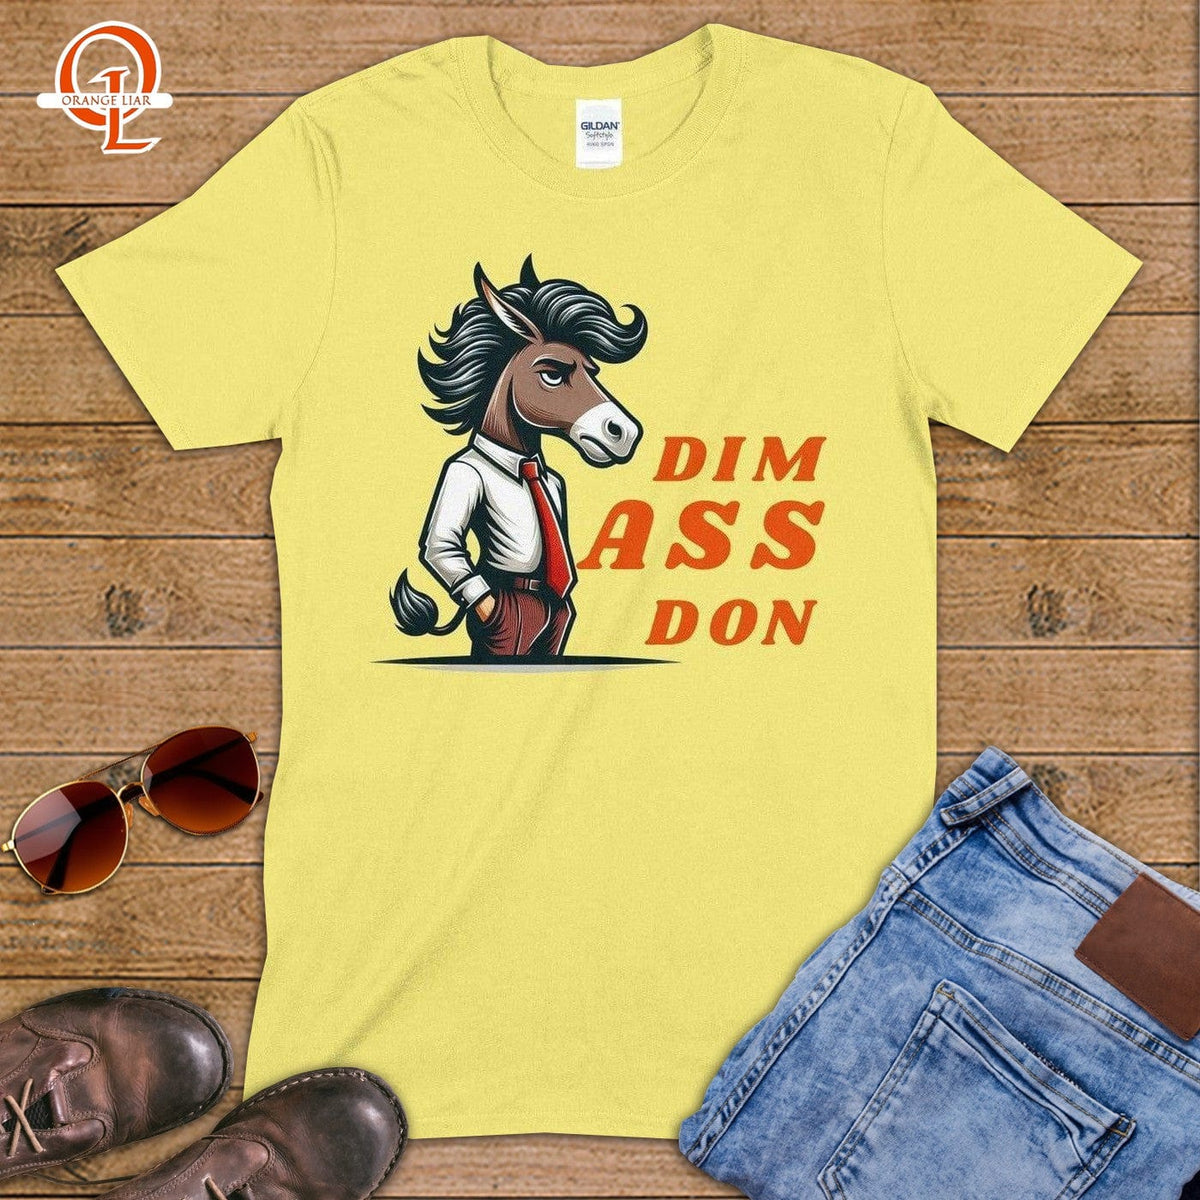 Dim Ass Don ~ T-Shirt-Orange Liar